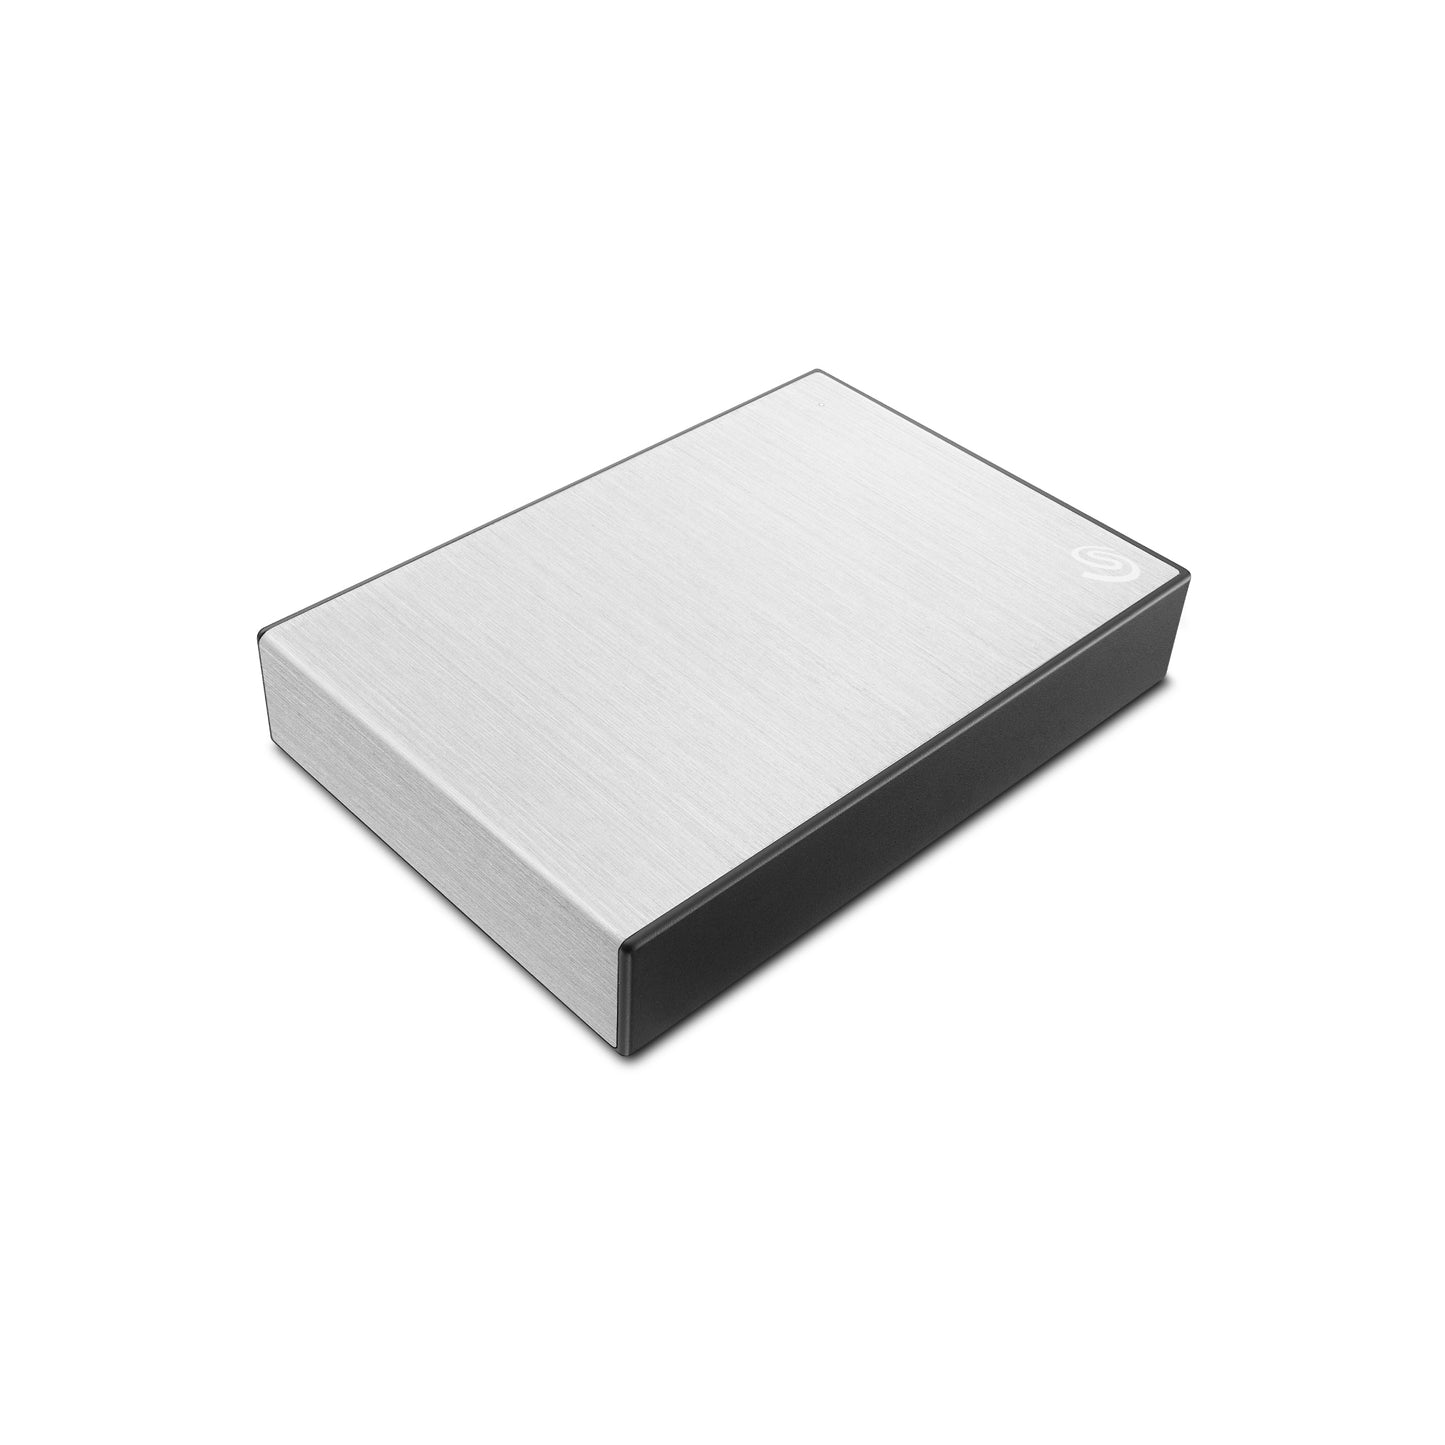 SEAGATE One Touch Slim USB 3.0 2TB - Silver